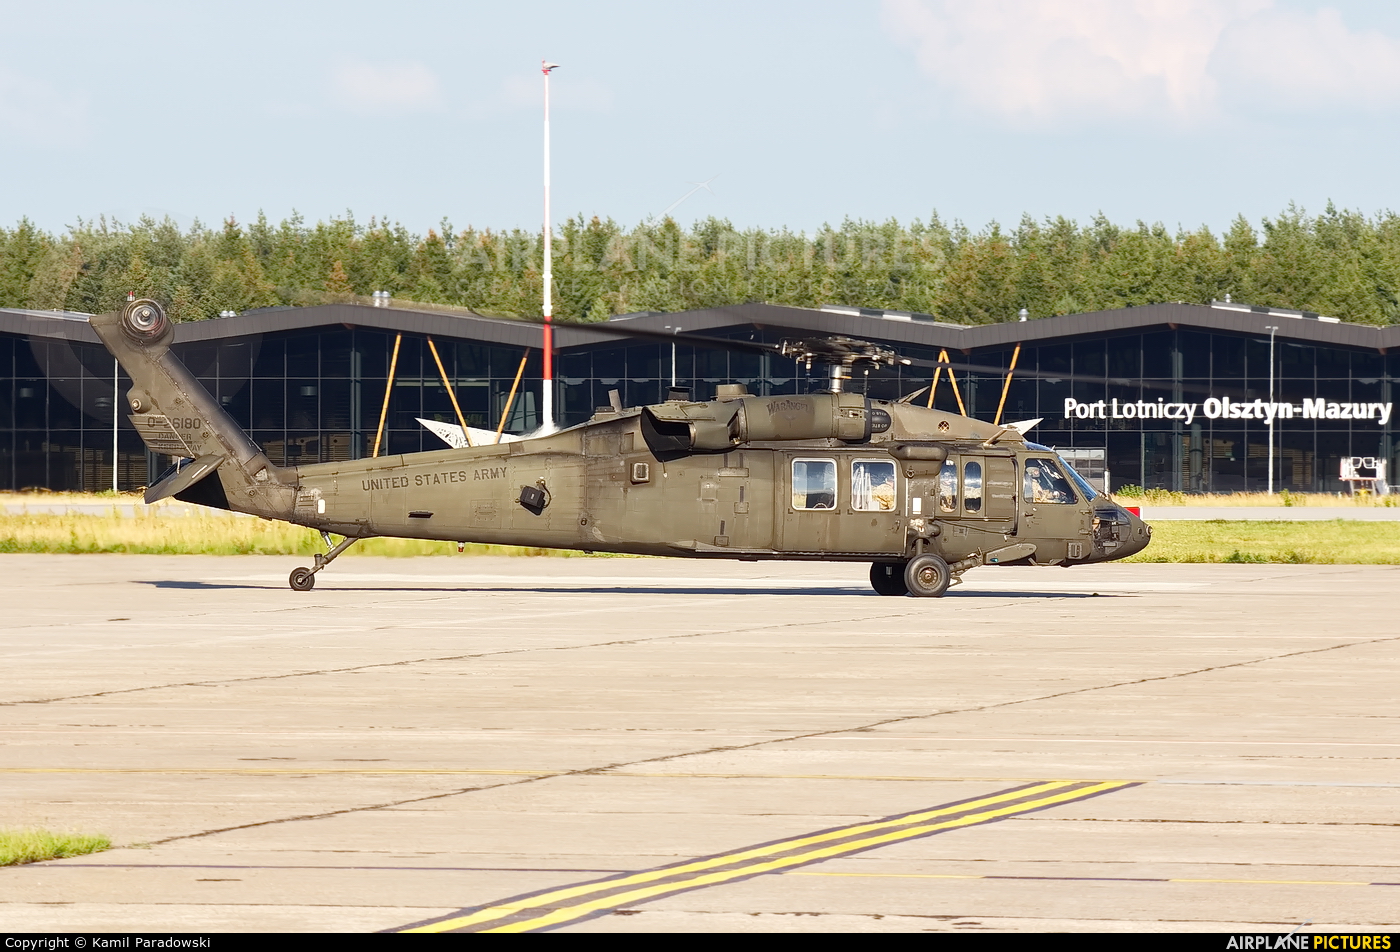 USA - Army 89-26180 aircraft at Olsztyn Mazury Airport (Szymany)